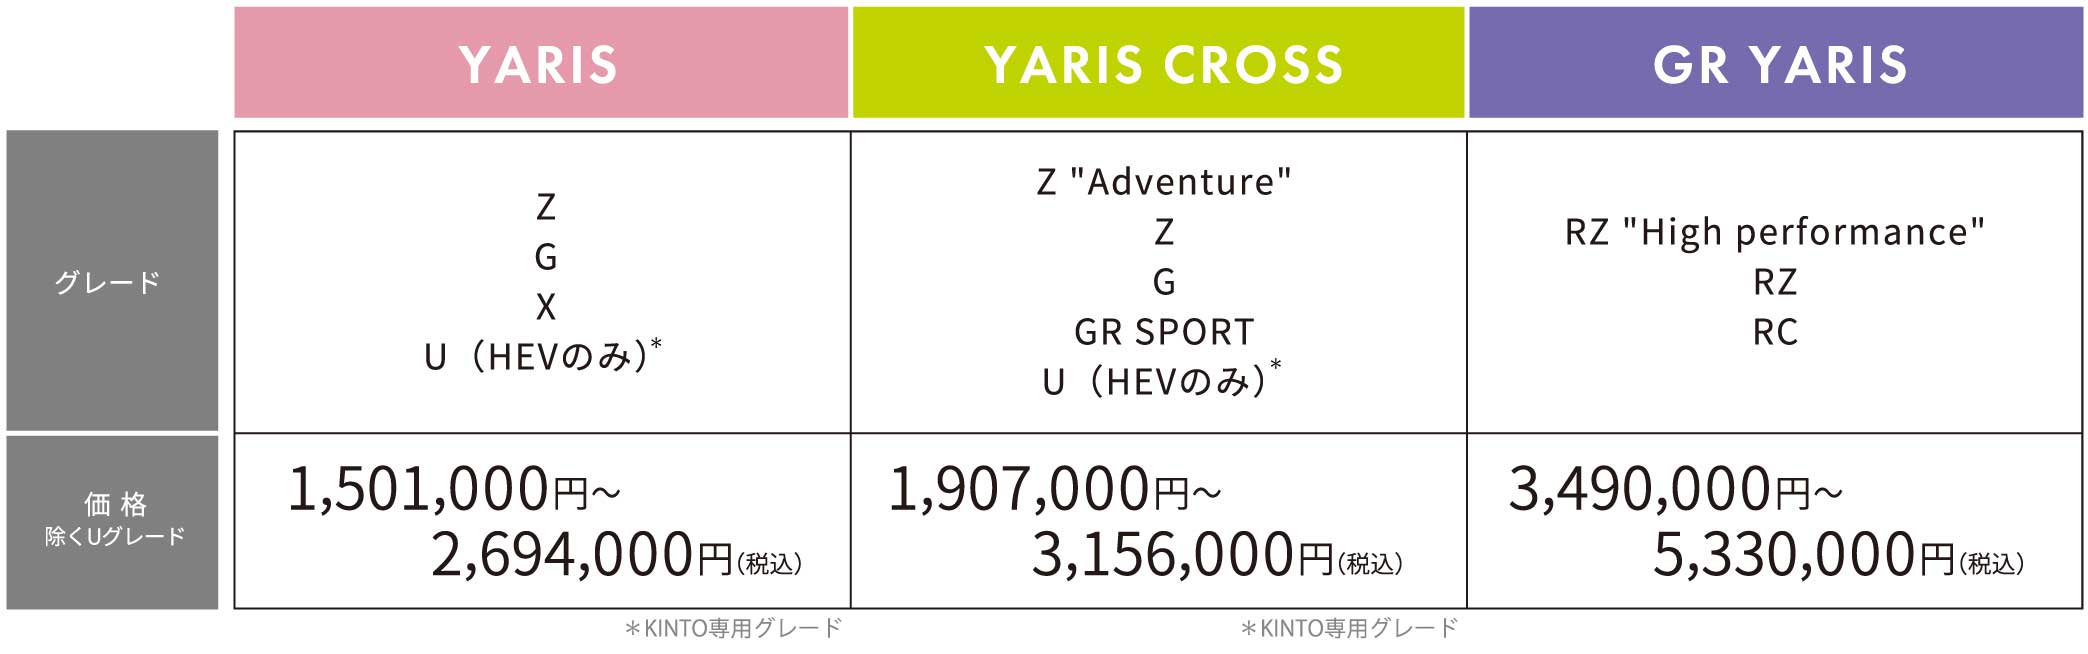 YARIS：Z G X U（HEVのみ）1,501,000円〜2,694,000円（税込）　YARIS CROSS：Z Adventure Z G GR SPORT U（HEVのみ）1,907,000円〜3,156,000円（税込）　GR YARIS：RZ High performance RZ RC 3,490,000円〜5,330,000円（税込)